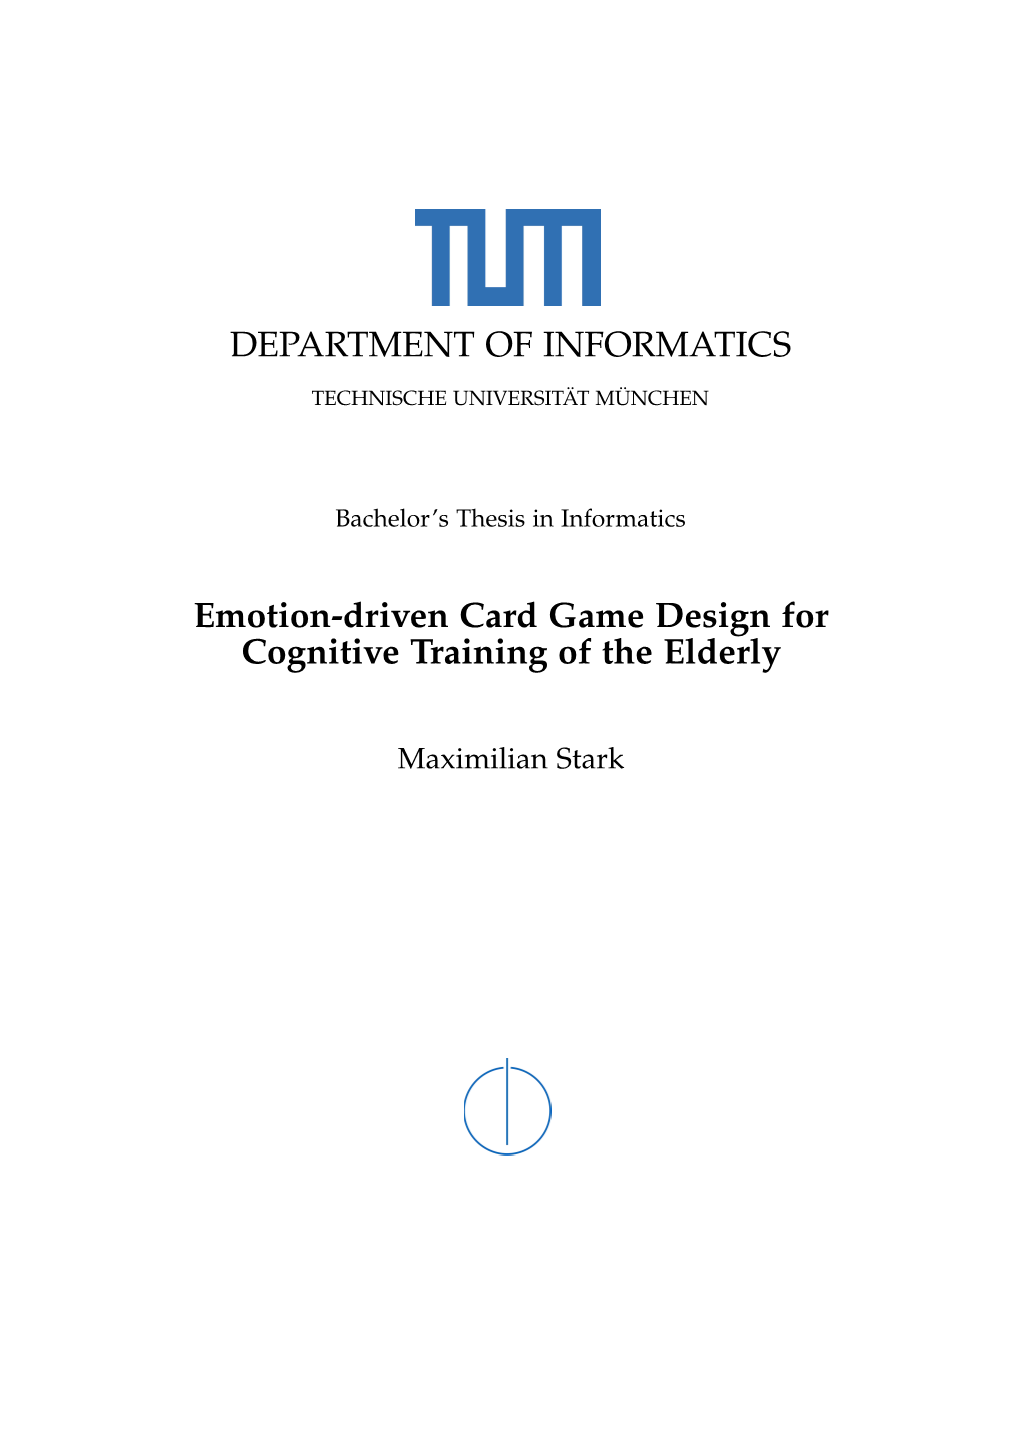 DEPARTMENT of INFORMATICS Emotion-Driven Card Game Design